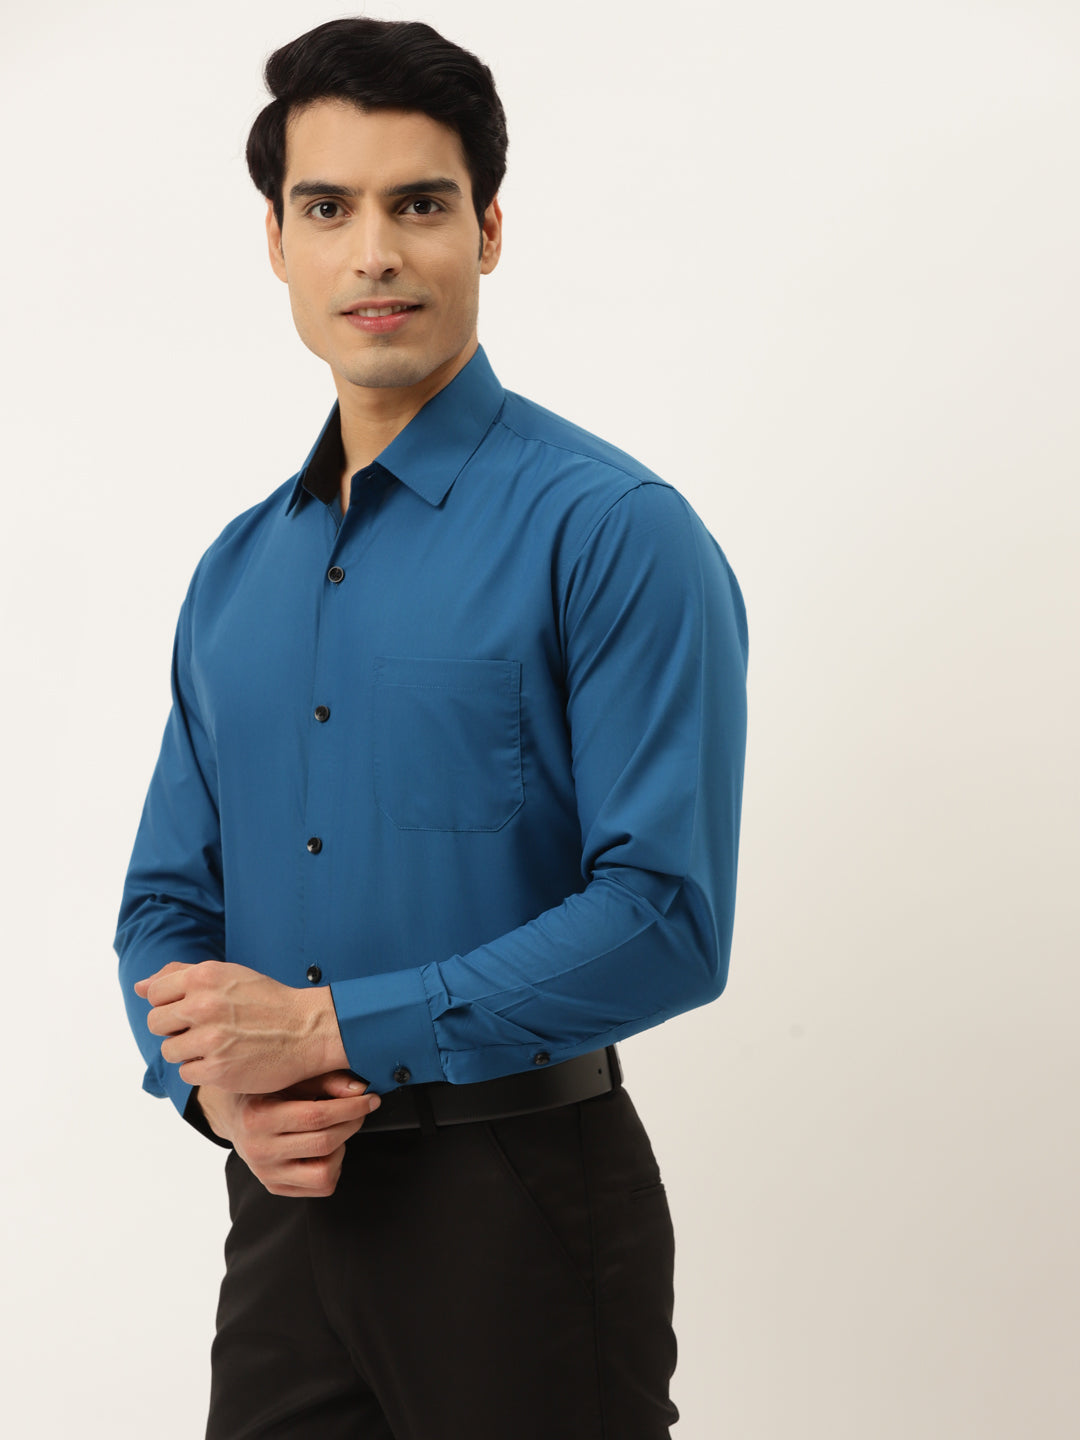 Men's Pecock Green Formal Shirt with black detailing ( SF 411Peacock ) - Jainish